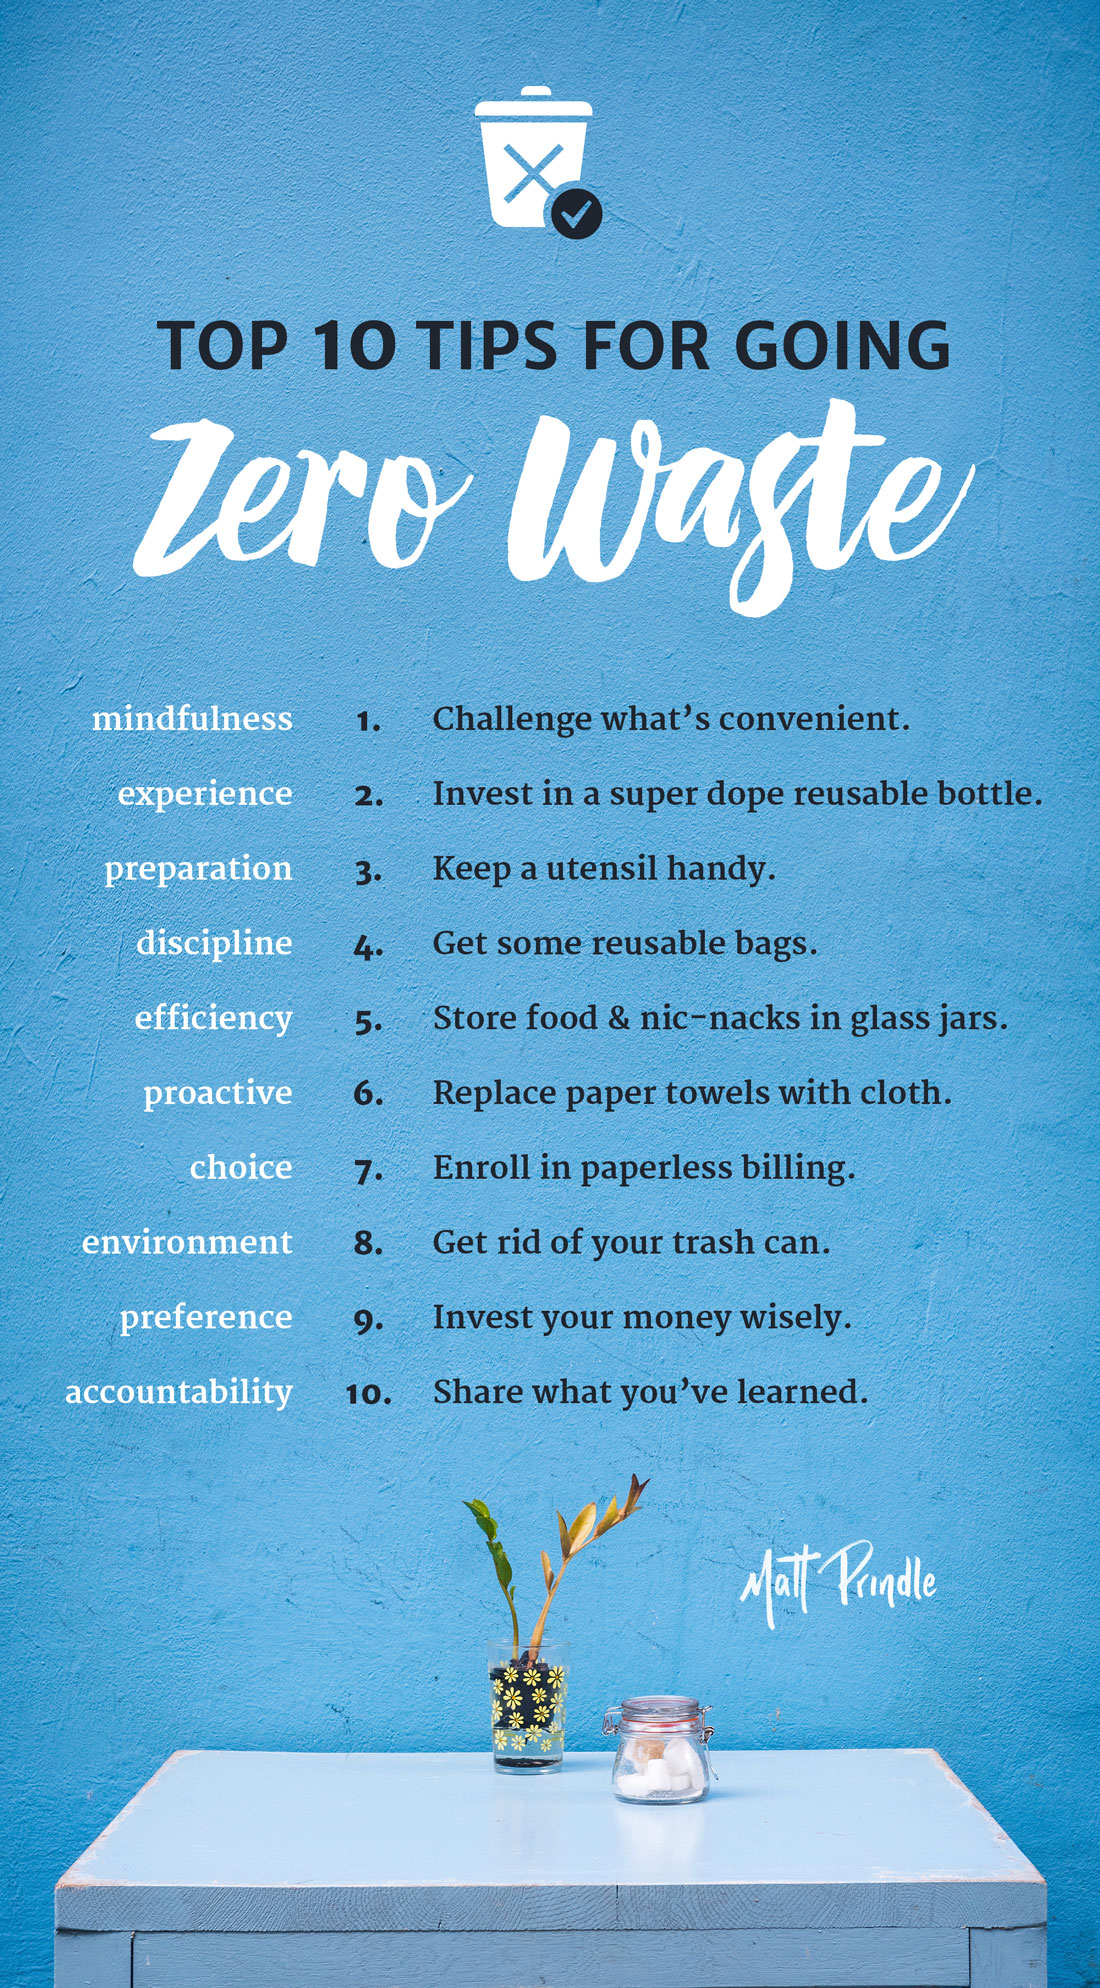 http://mattprindle.com/wp-content/uploads/2016/04/top-10-tips-for-going-zero-waste-1.jpg